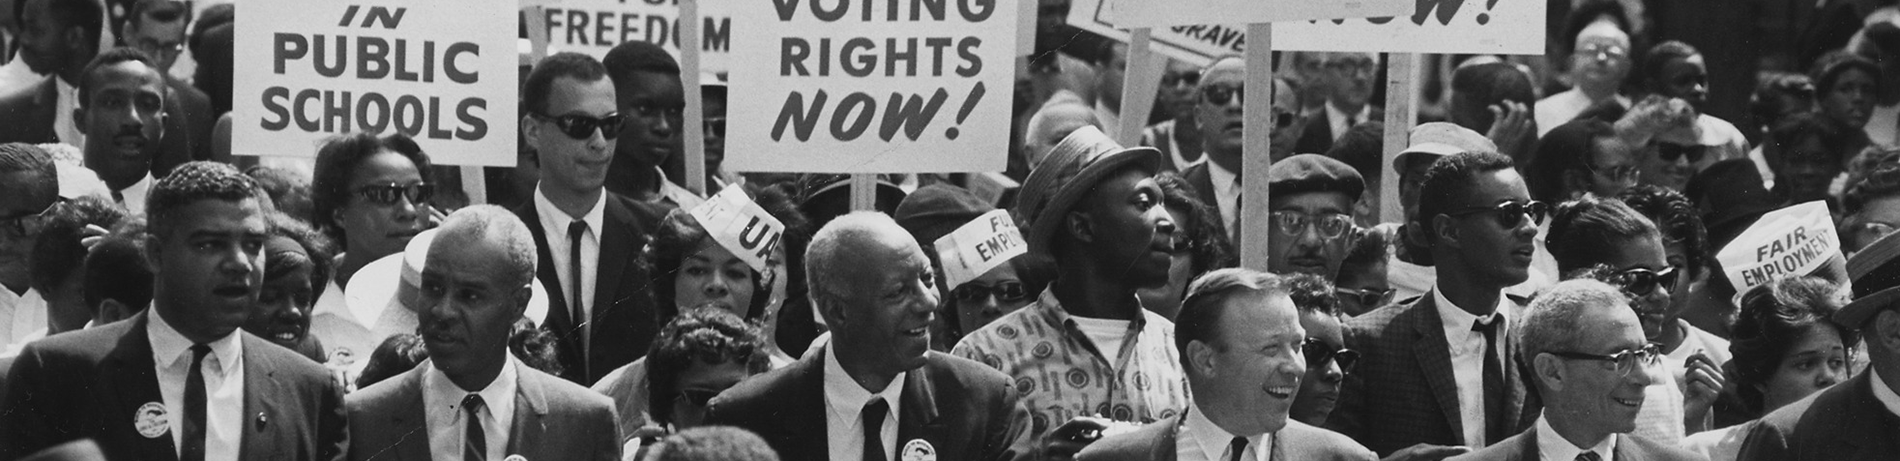 1960s civil rights march